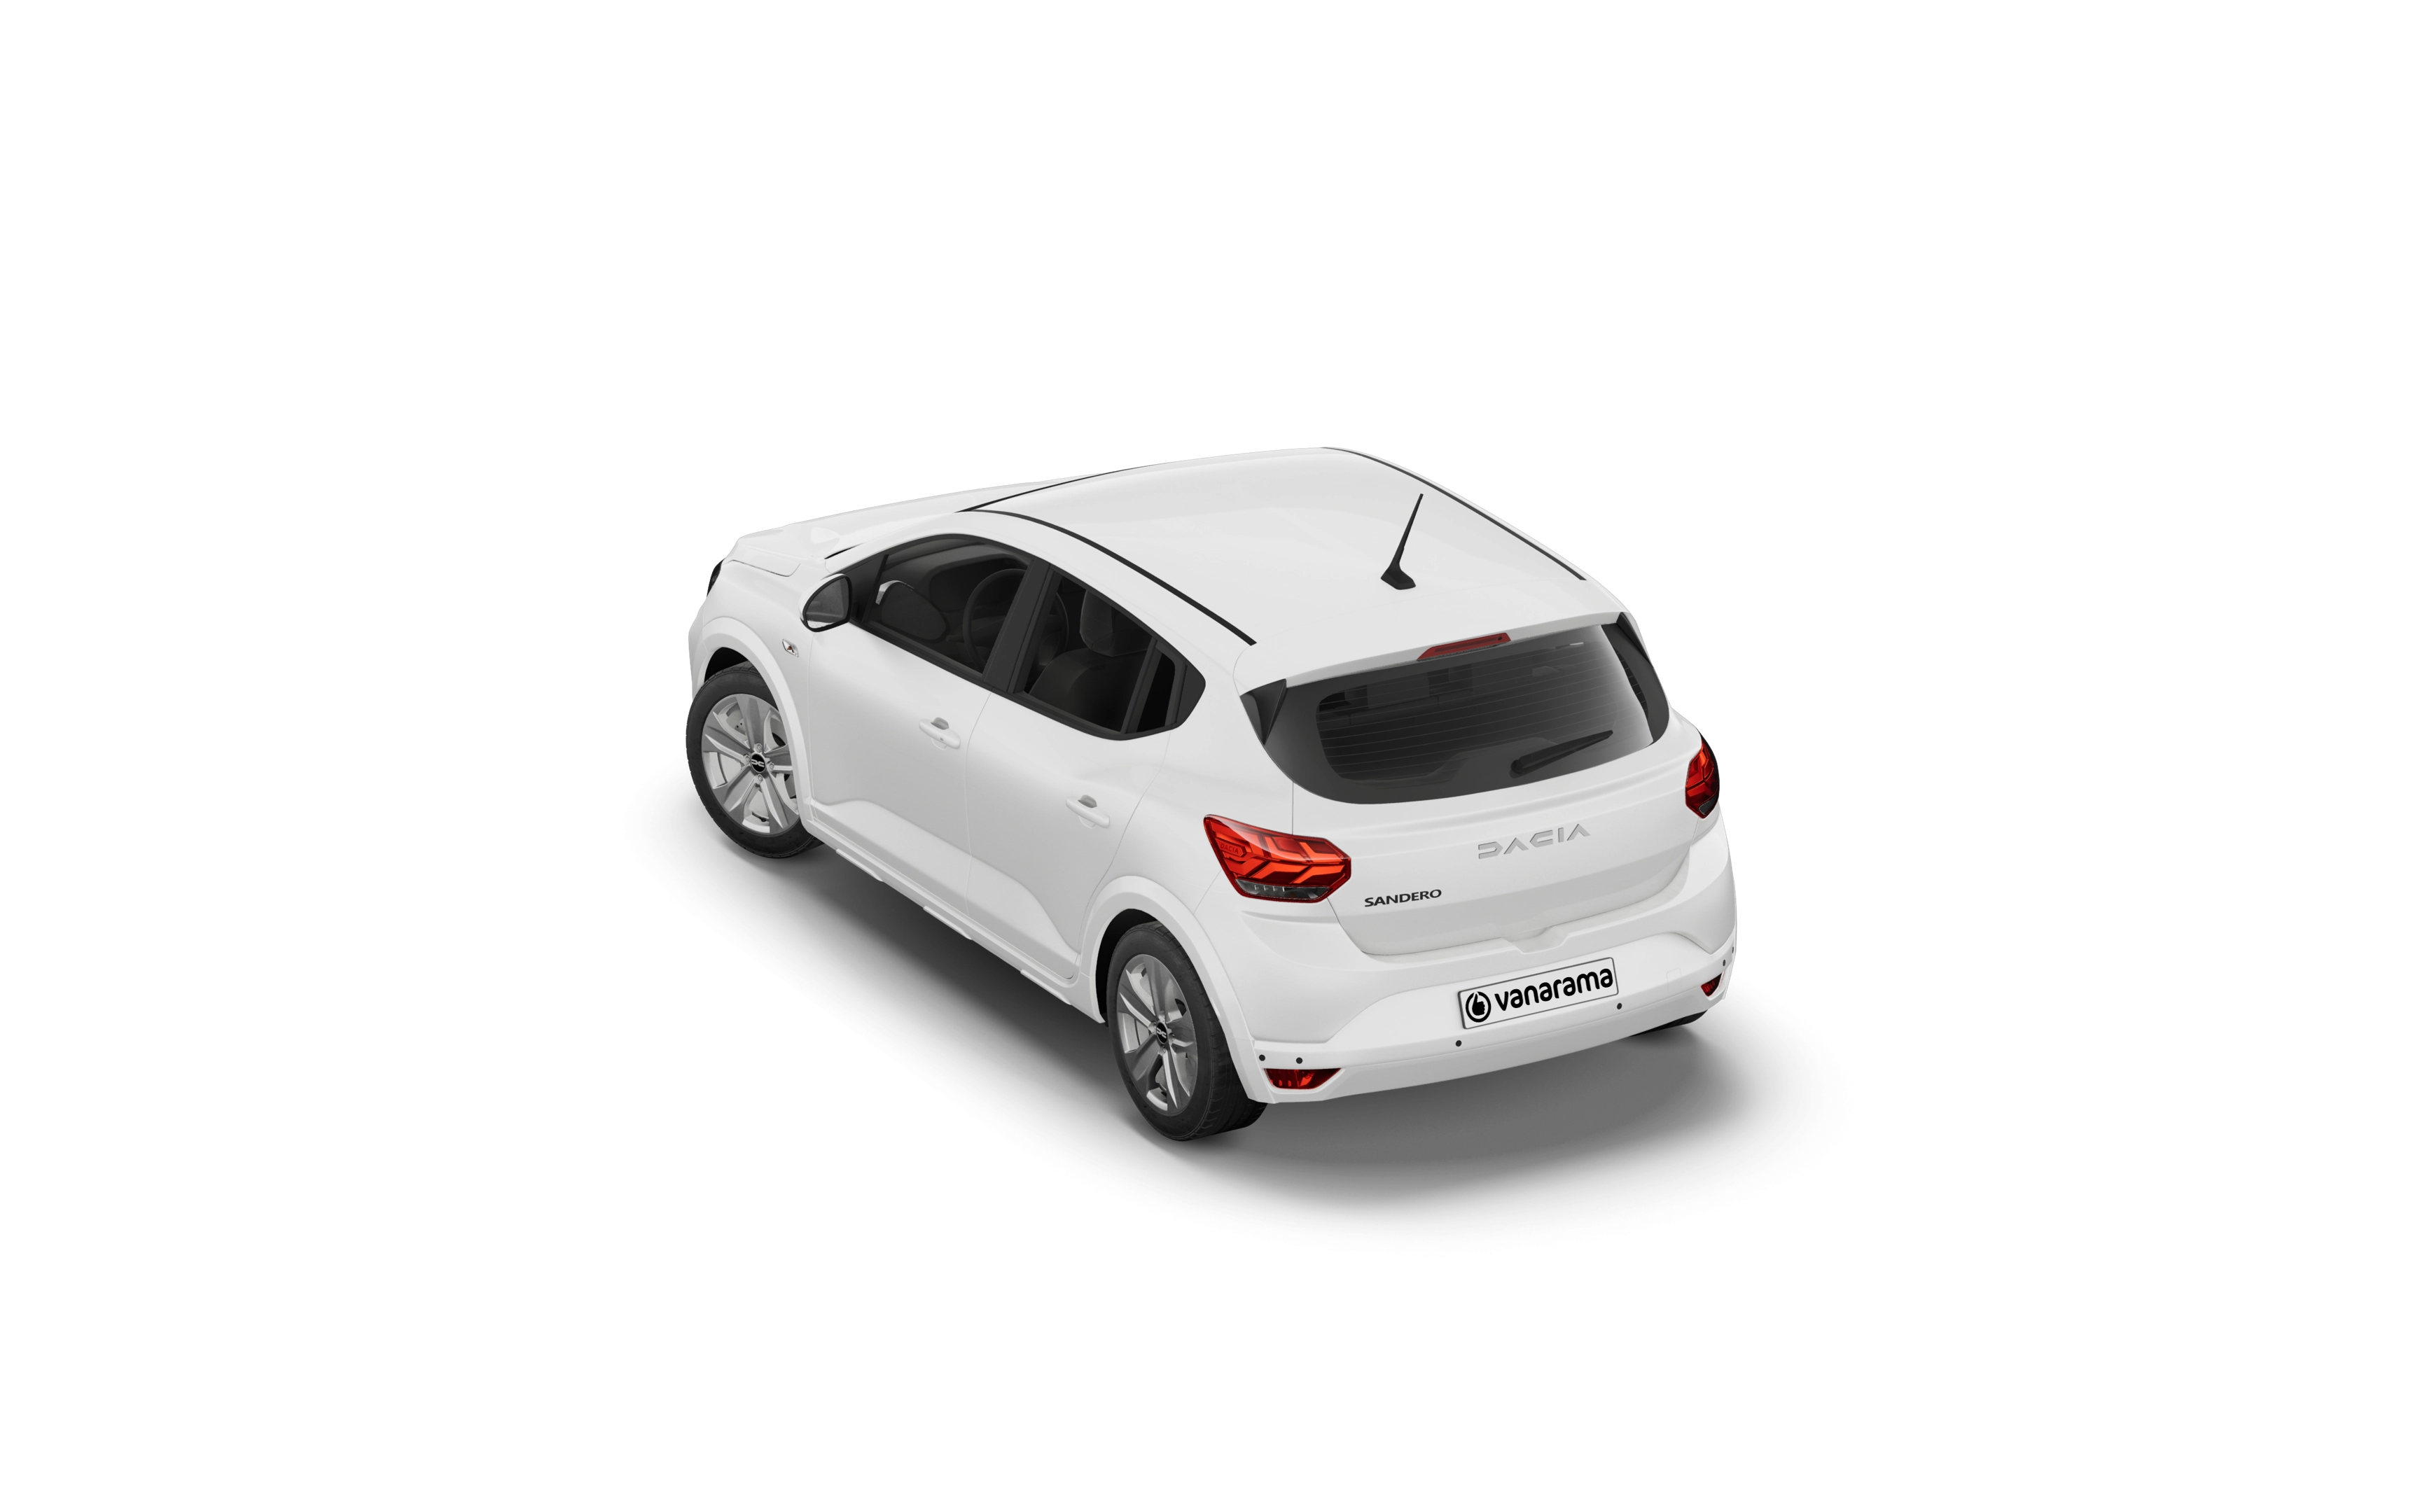 Dacia sandero hatchback 1.0 tce bi-fuel essential 5 doors